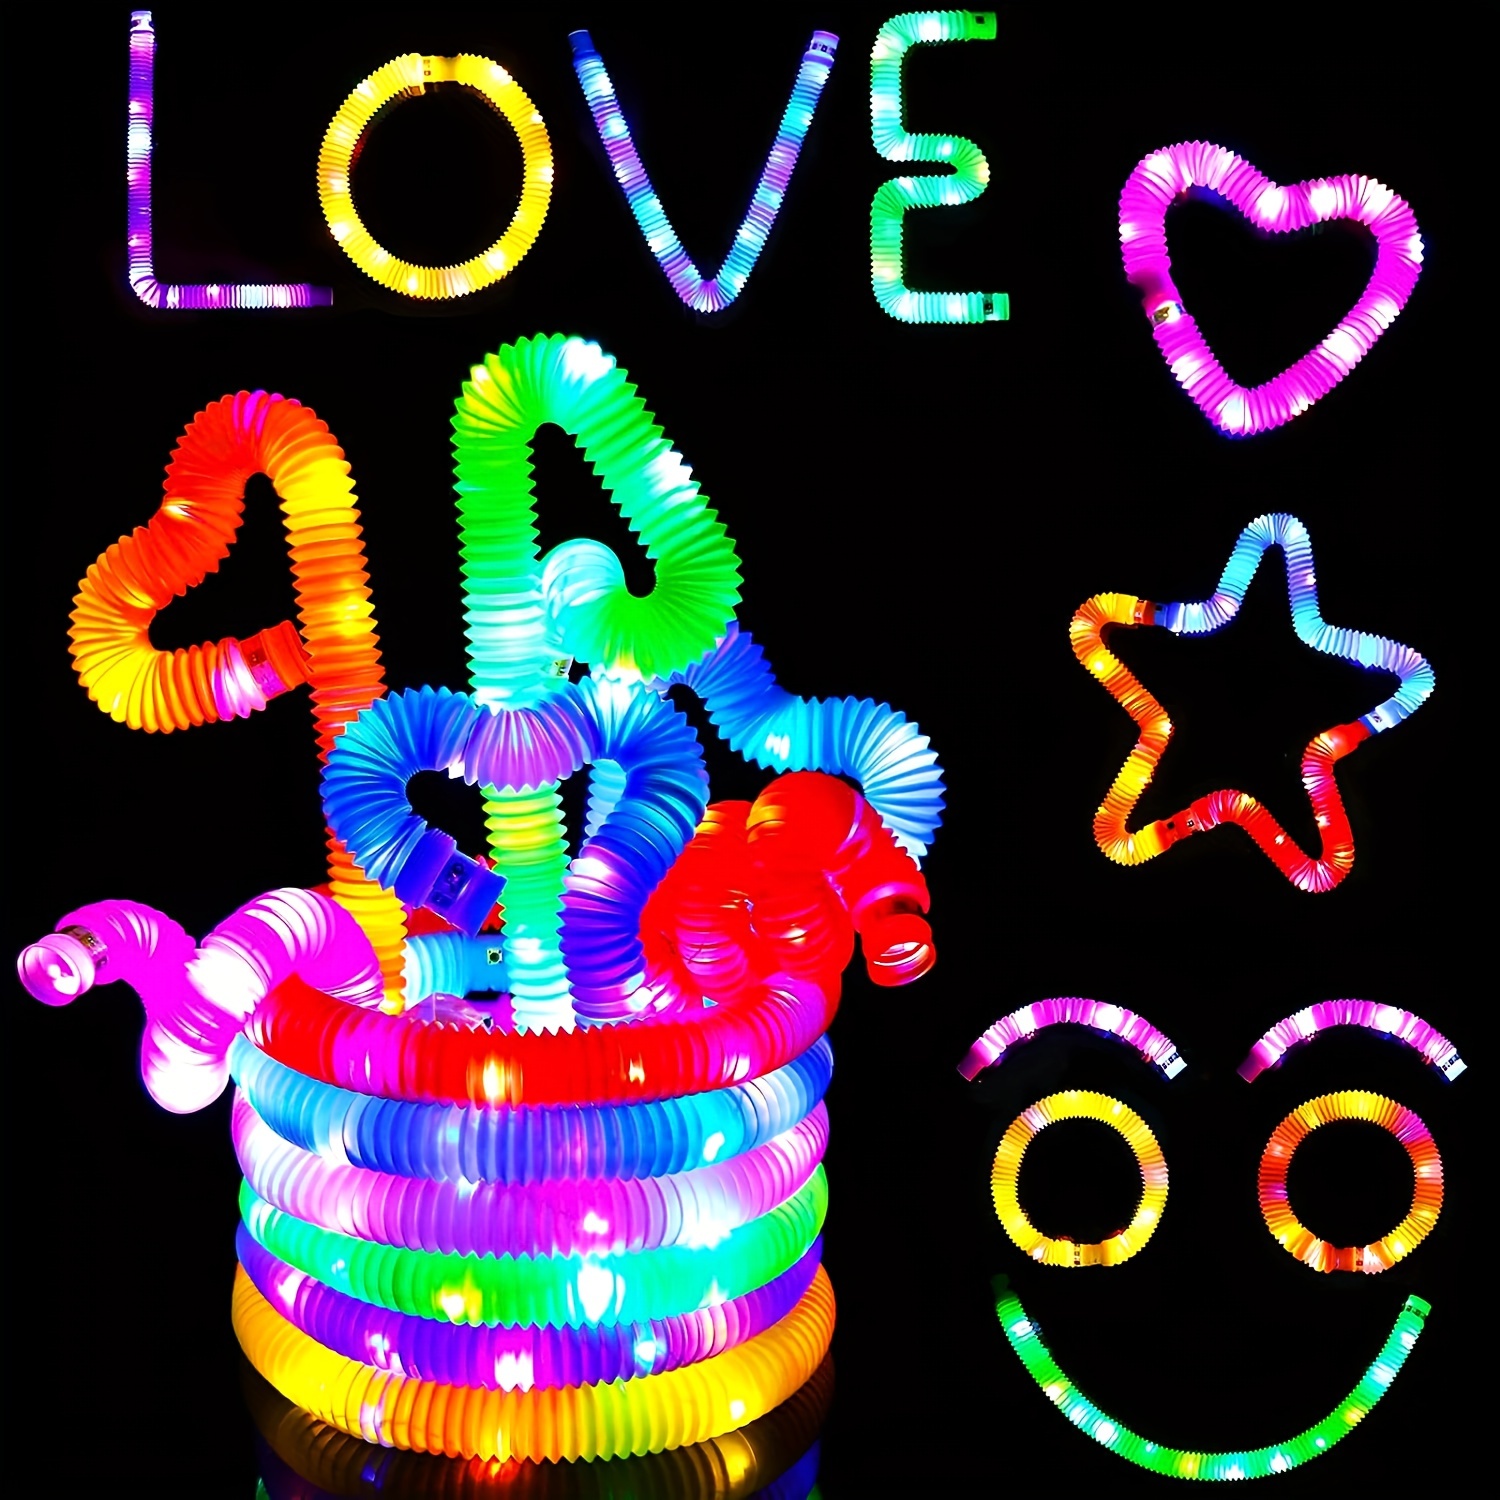 1pc, LED Sticks Bracelets Wristbands Glow in The Dark Party Supplies Neon Light Up Bracelet Toys Kids Adults Party Favor, Glow in The Dark Party